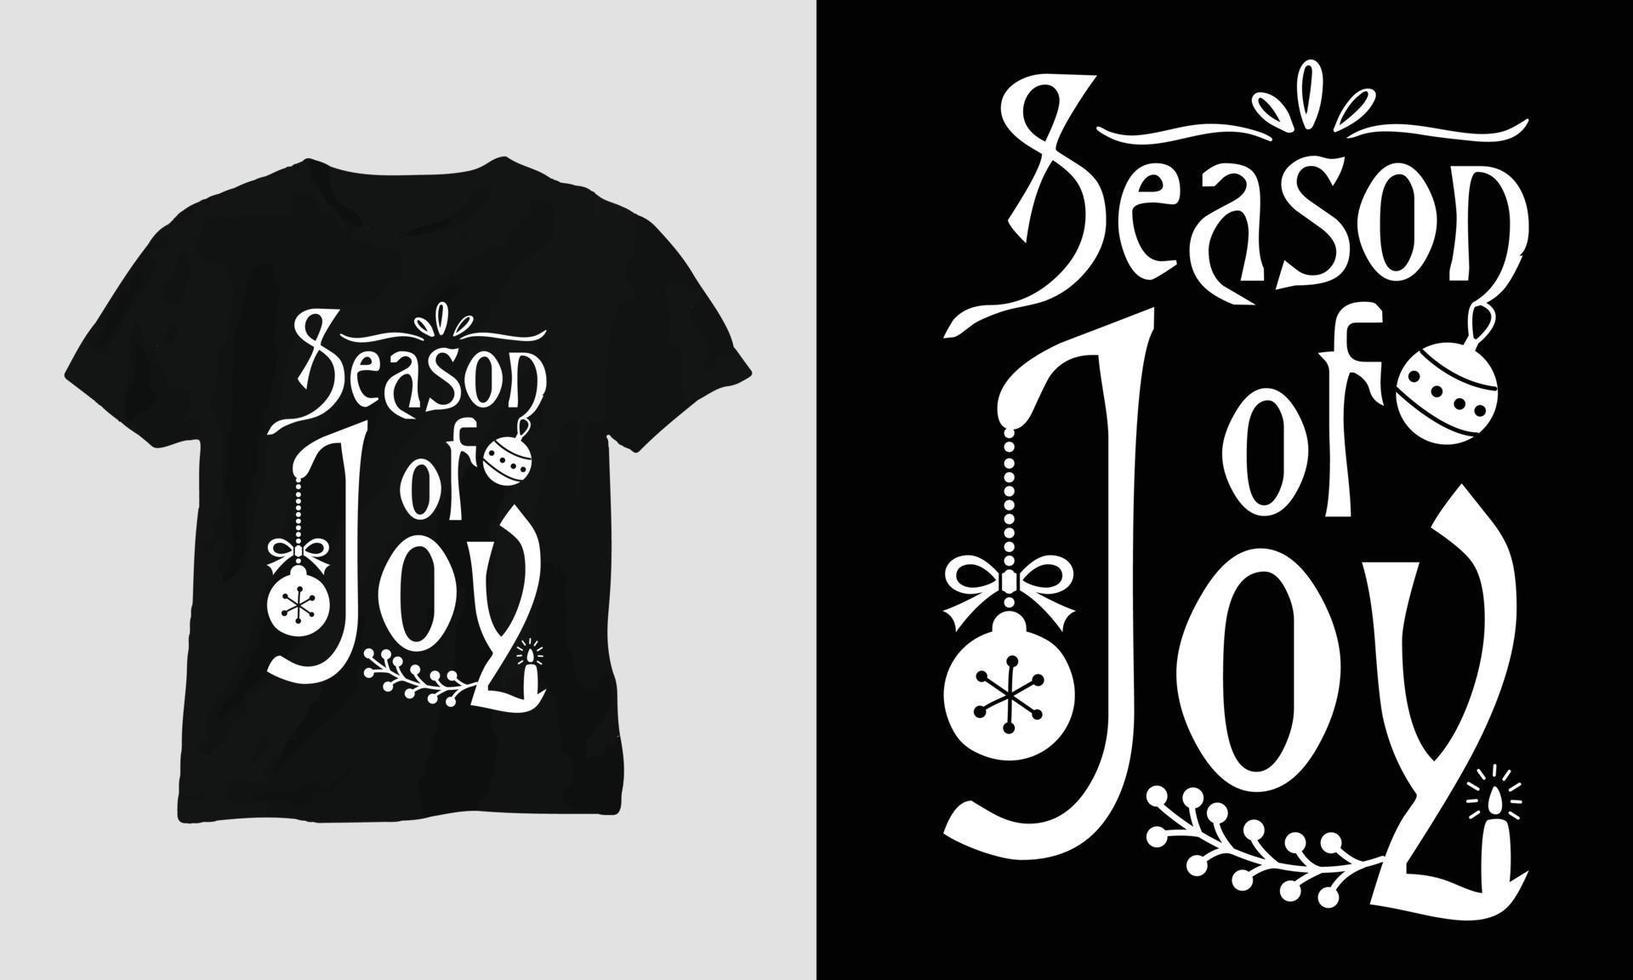 Season of joy - Christmas Day T-shirt Design vector